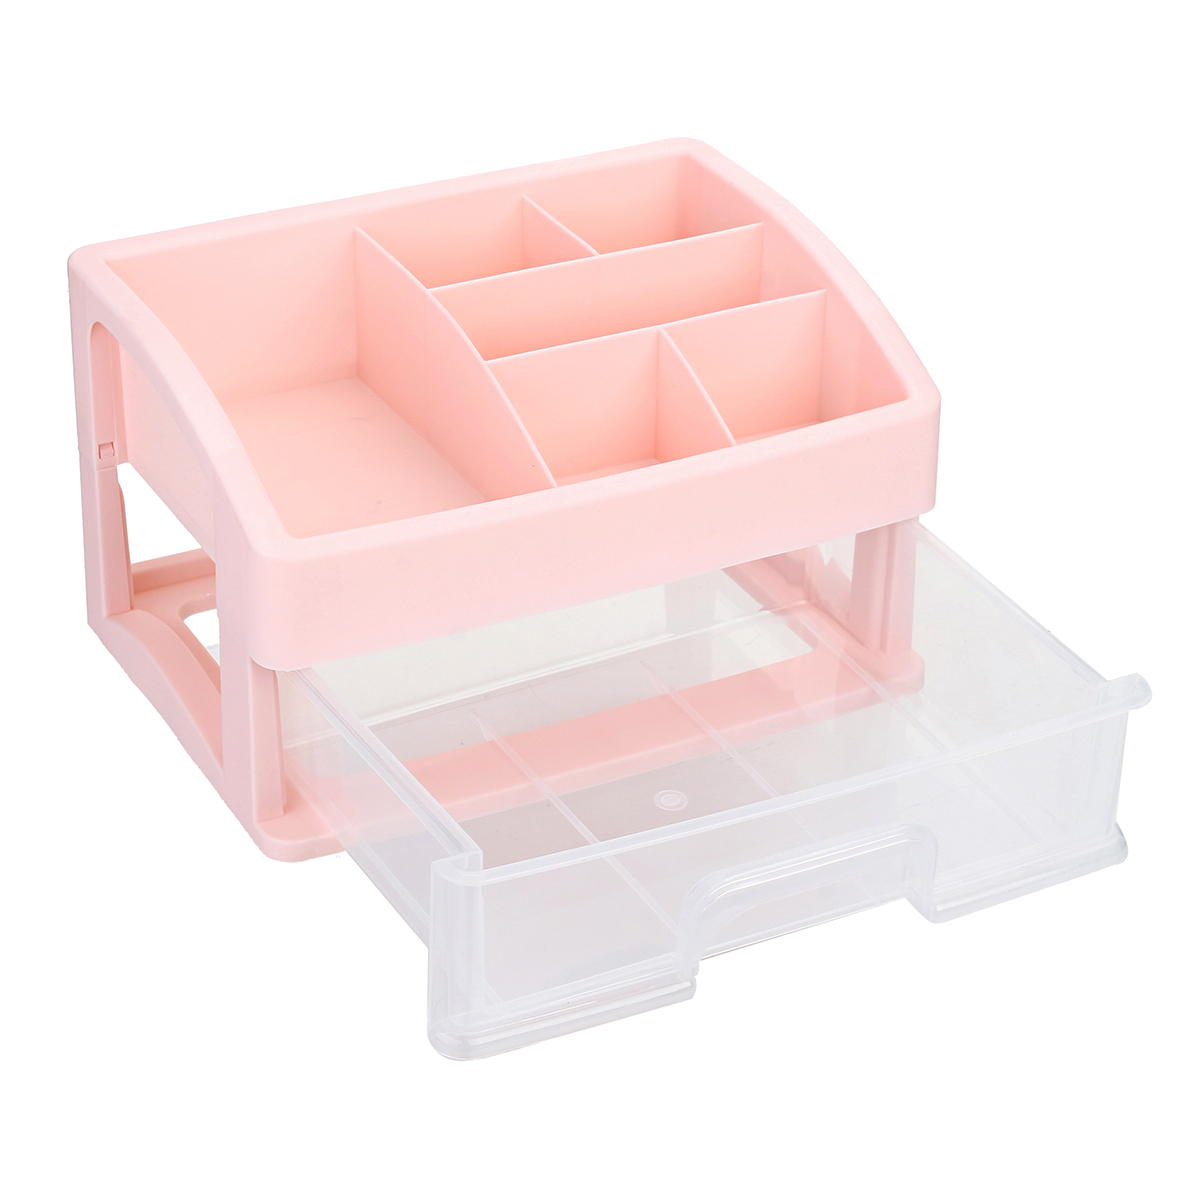 123-Layers-Plastic-Desktop-Organizer-Drawer-Makeup-Holder-Box-Make-Sundry-Storage-Box-Container-1451646-7